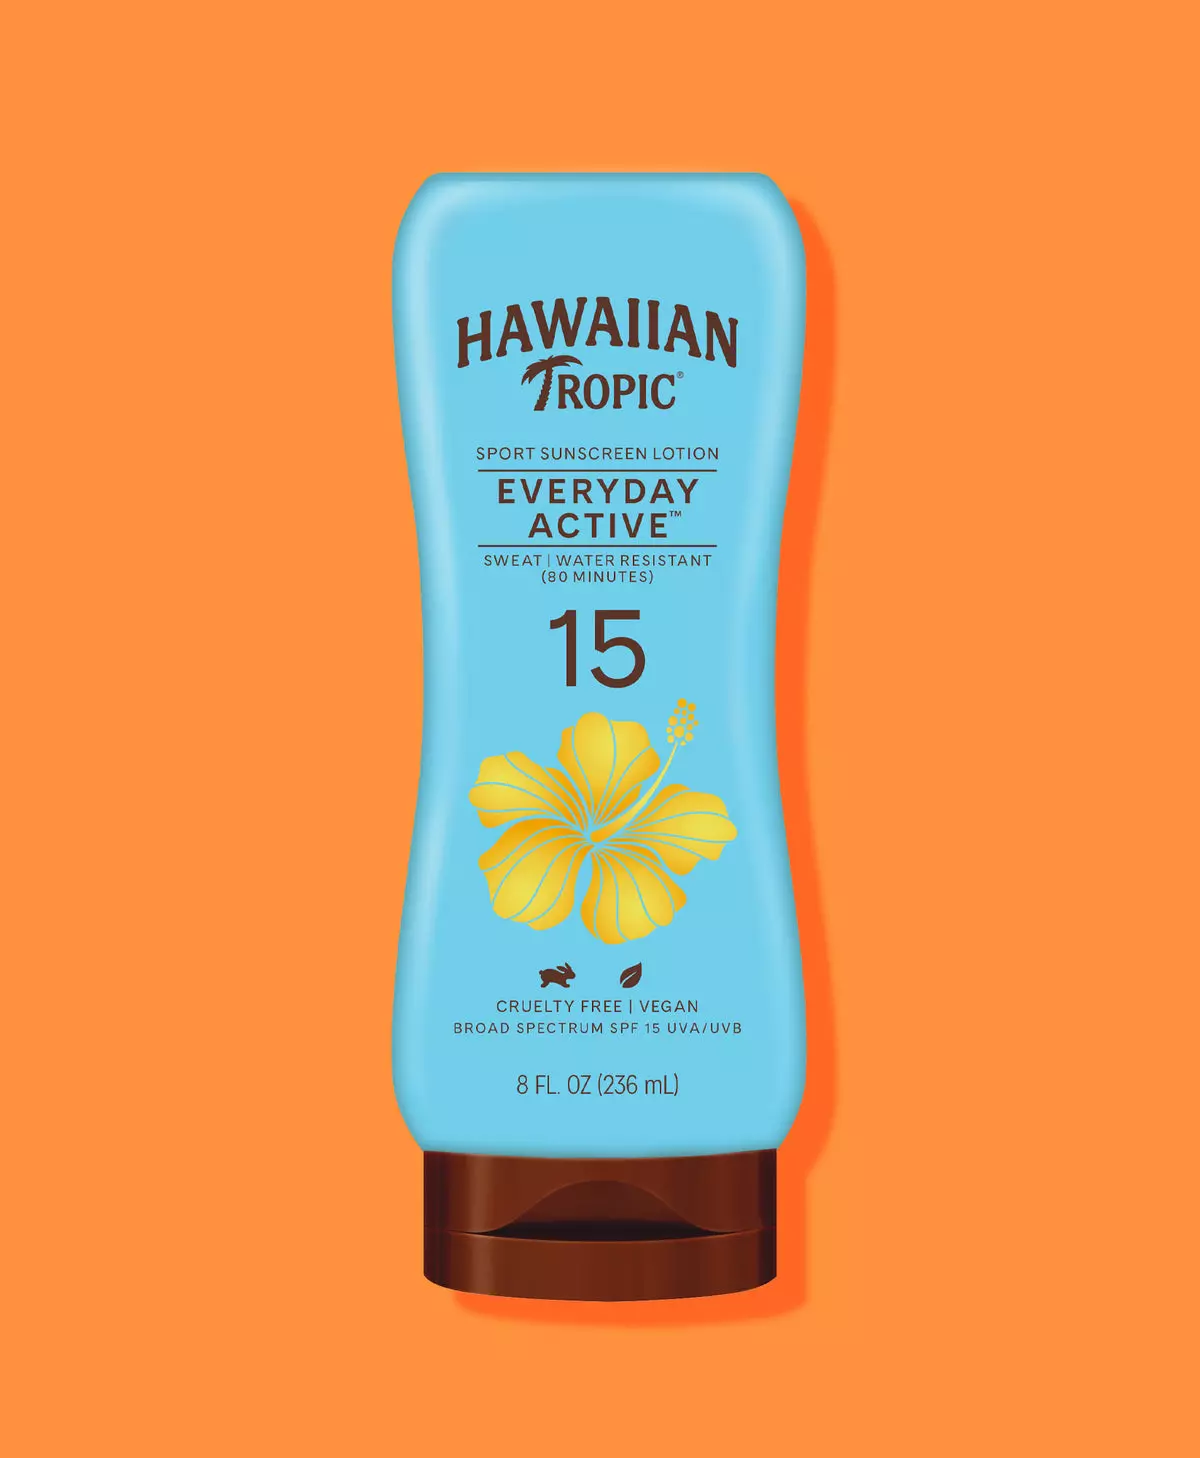 Hawaiian Tropic Island Sport Sunscreen Lotion